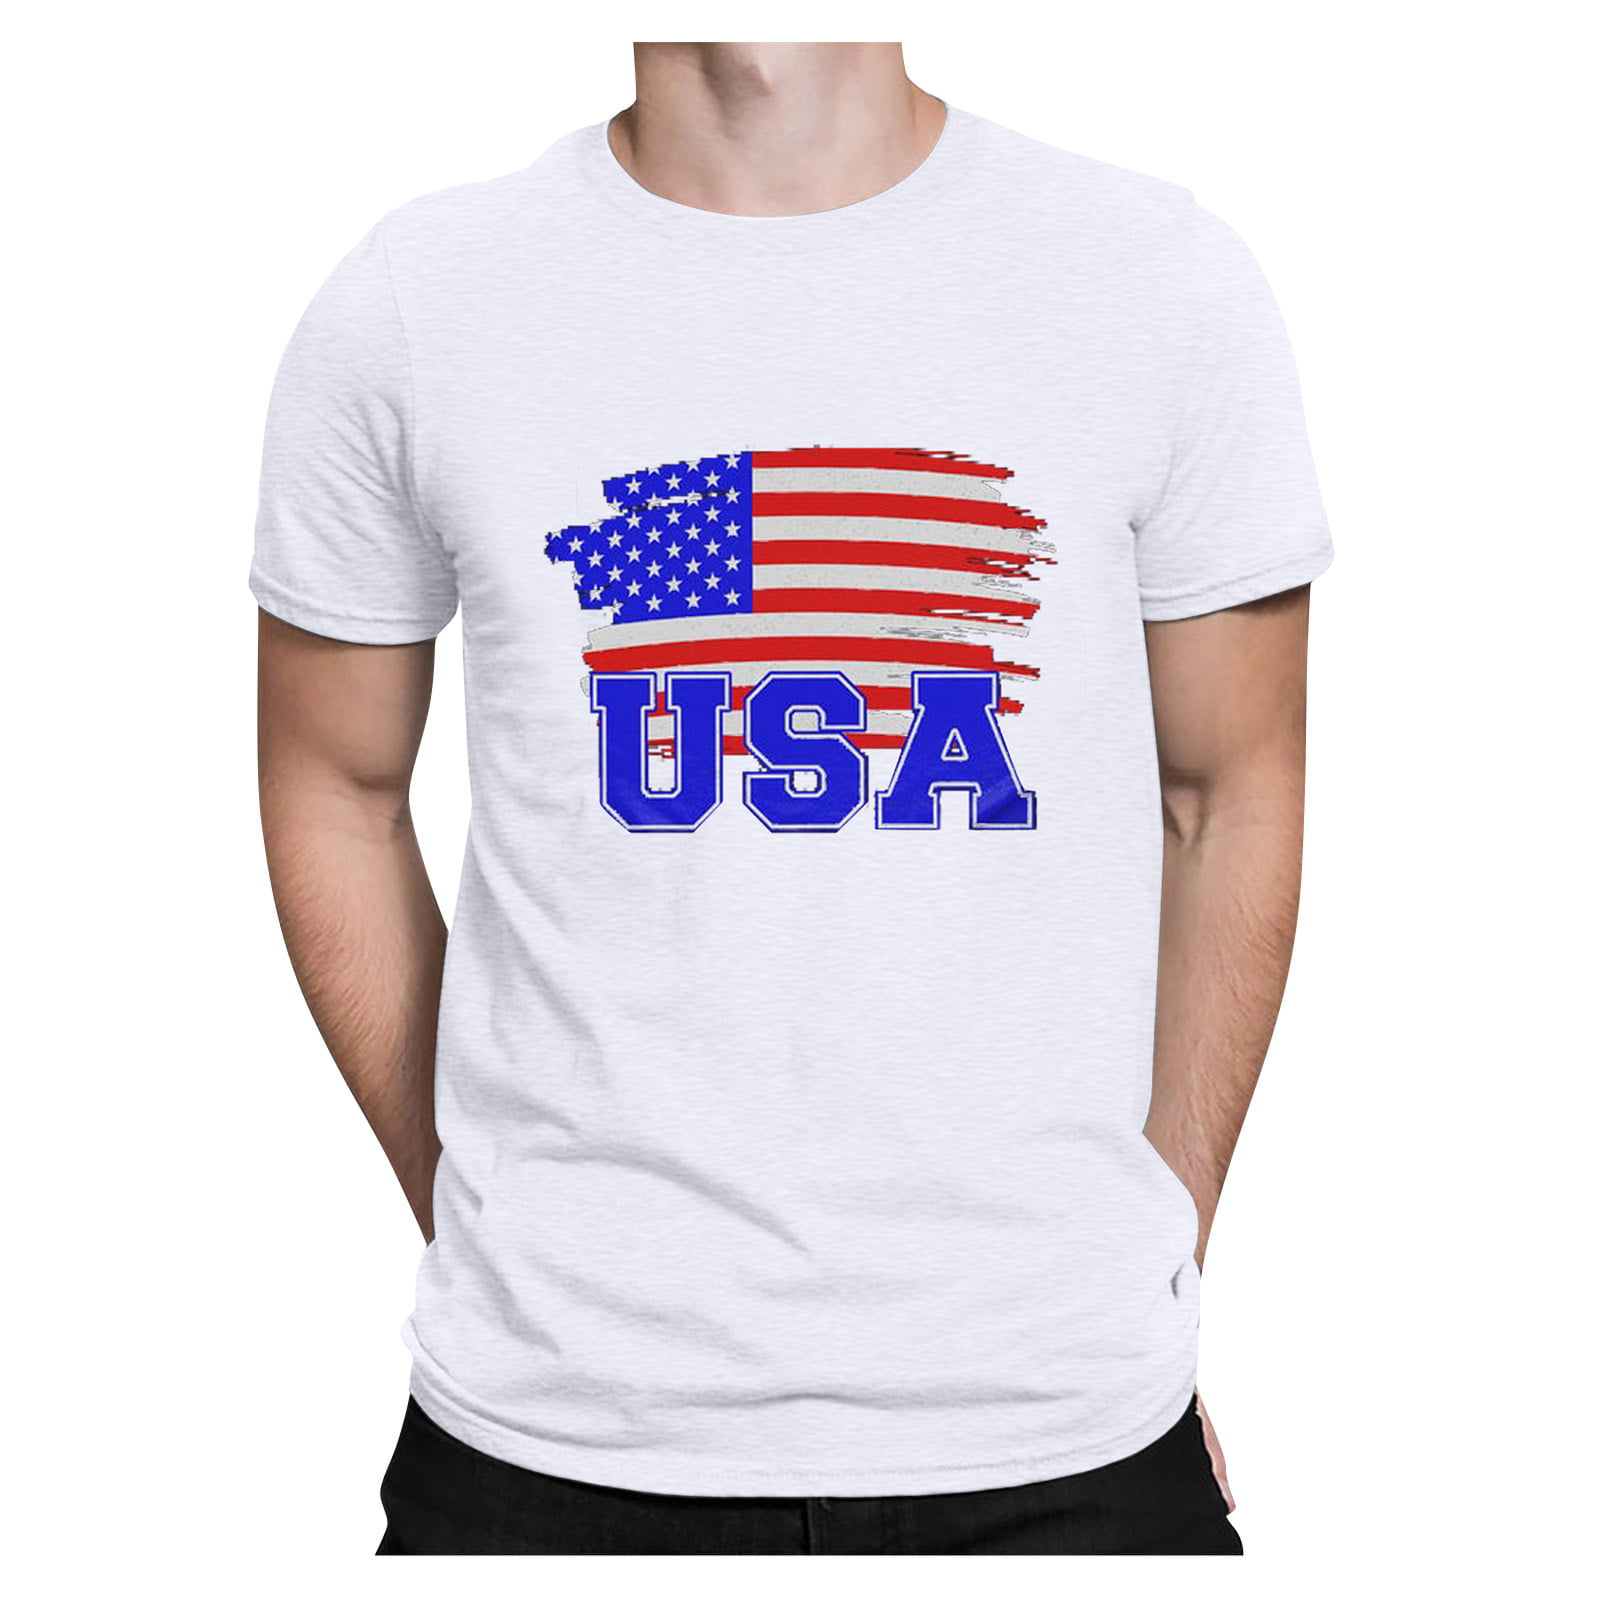 Nuewofally Mens Long Sleeve Hoodies Independence Day 3D Flag Printed Sweatershirt Casual Vertical Stripes Top 